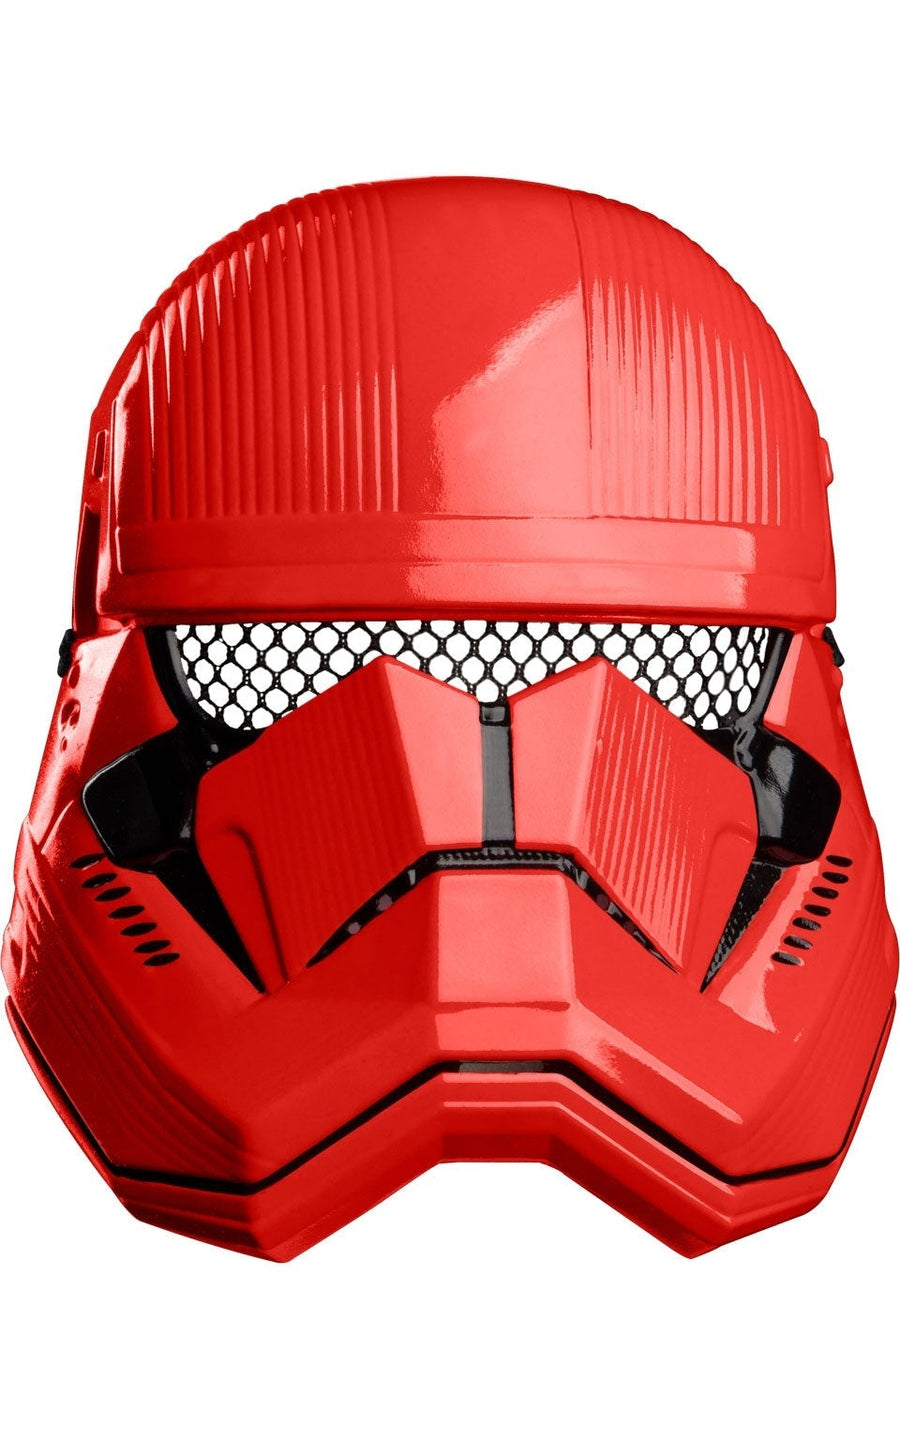 Red Trooper 1/2 Mask Kids Star Wars Sith Rise of Skywalker_1